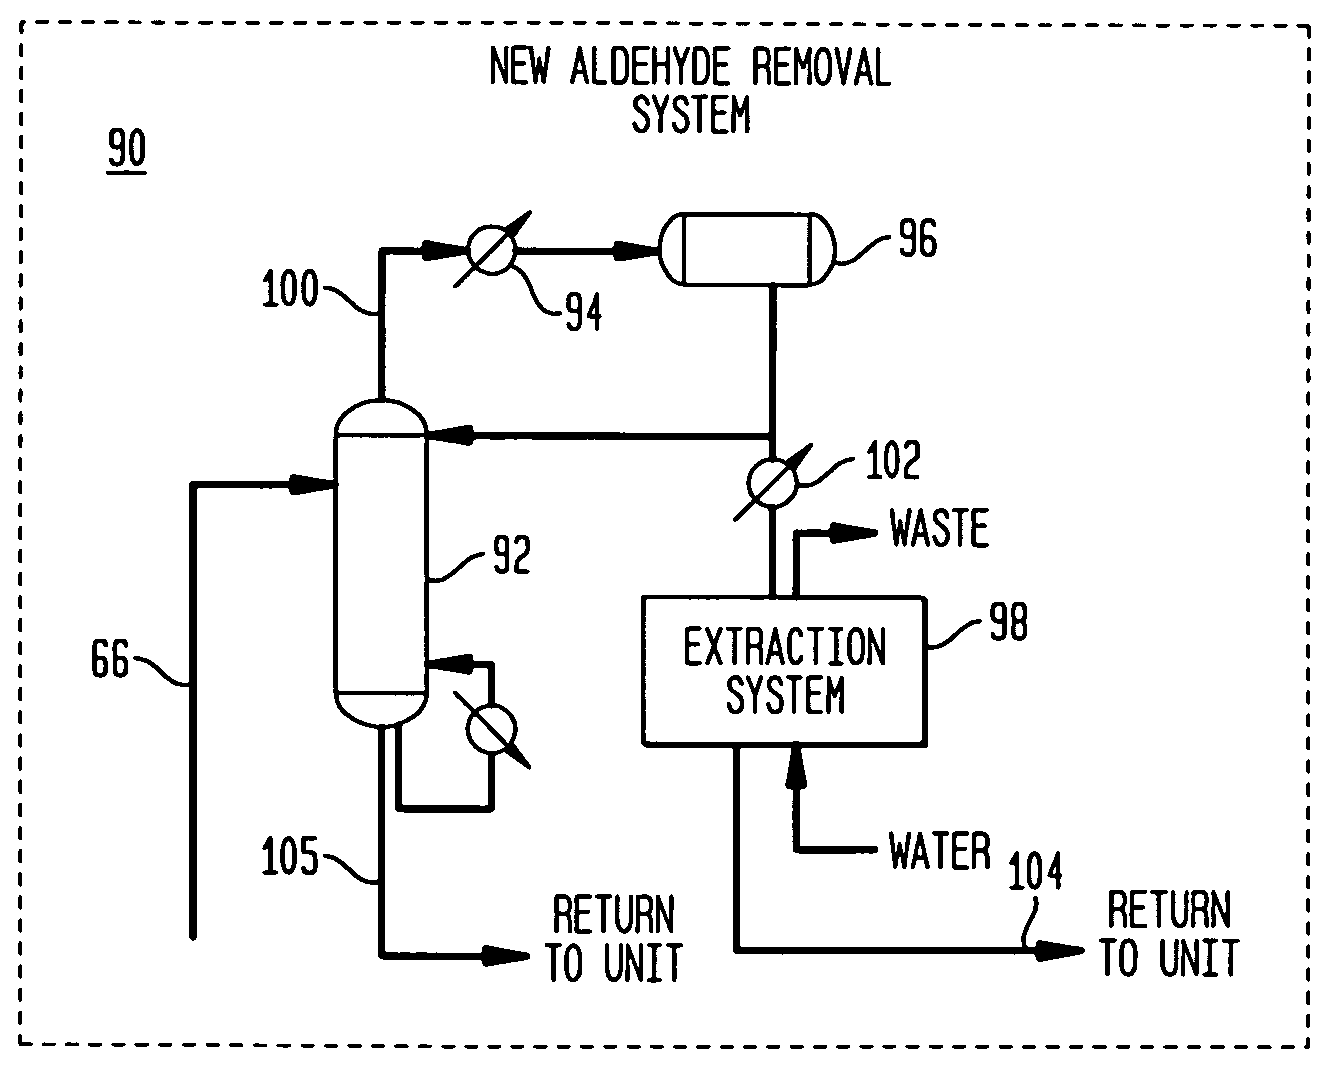 Methanol carbonylation with improved aldehyde removal